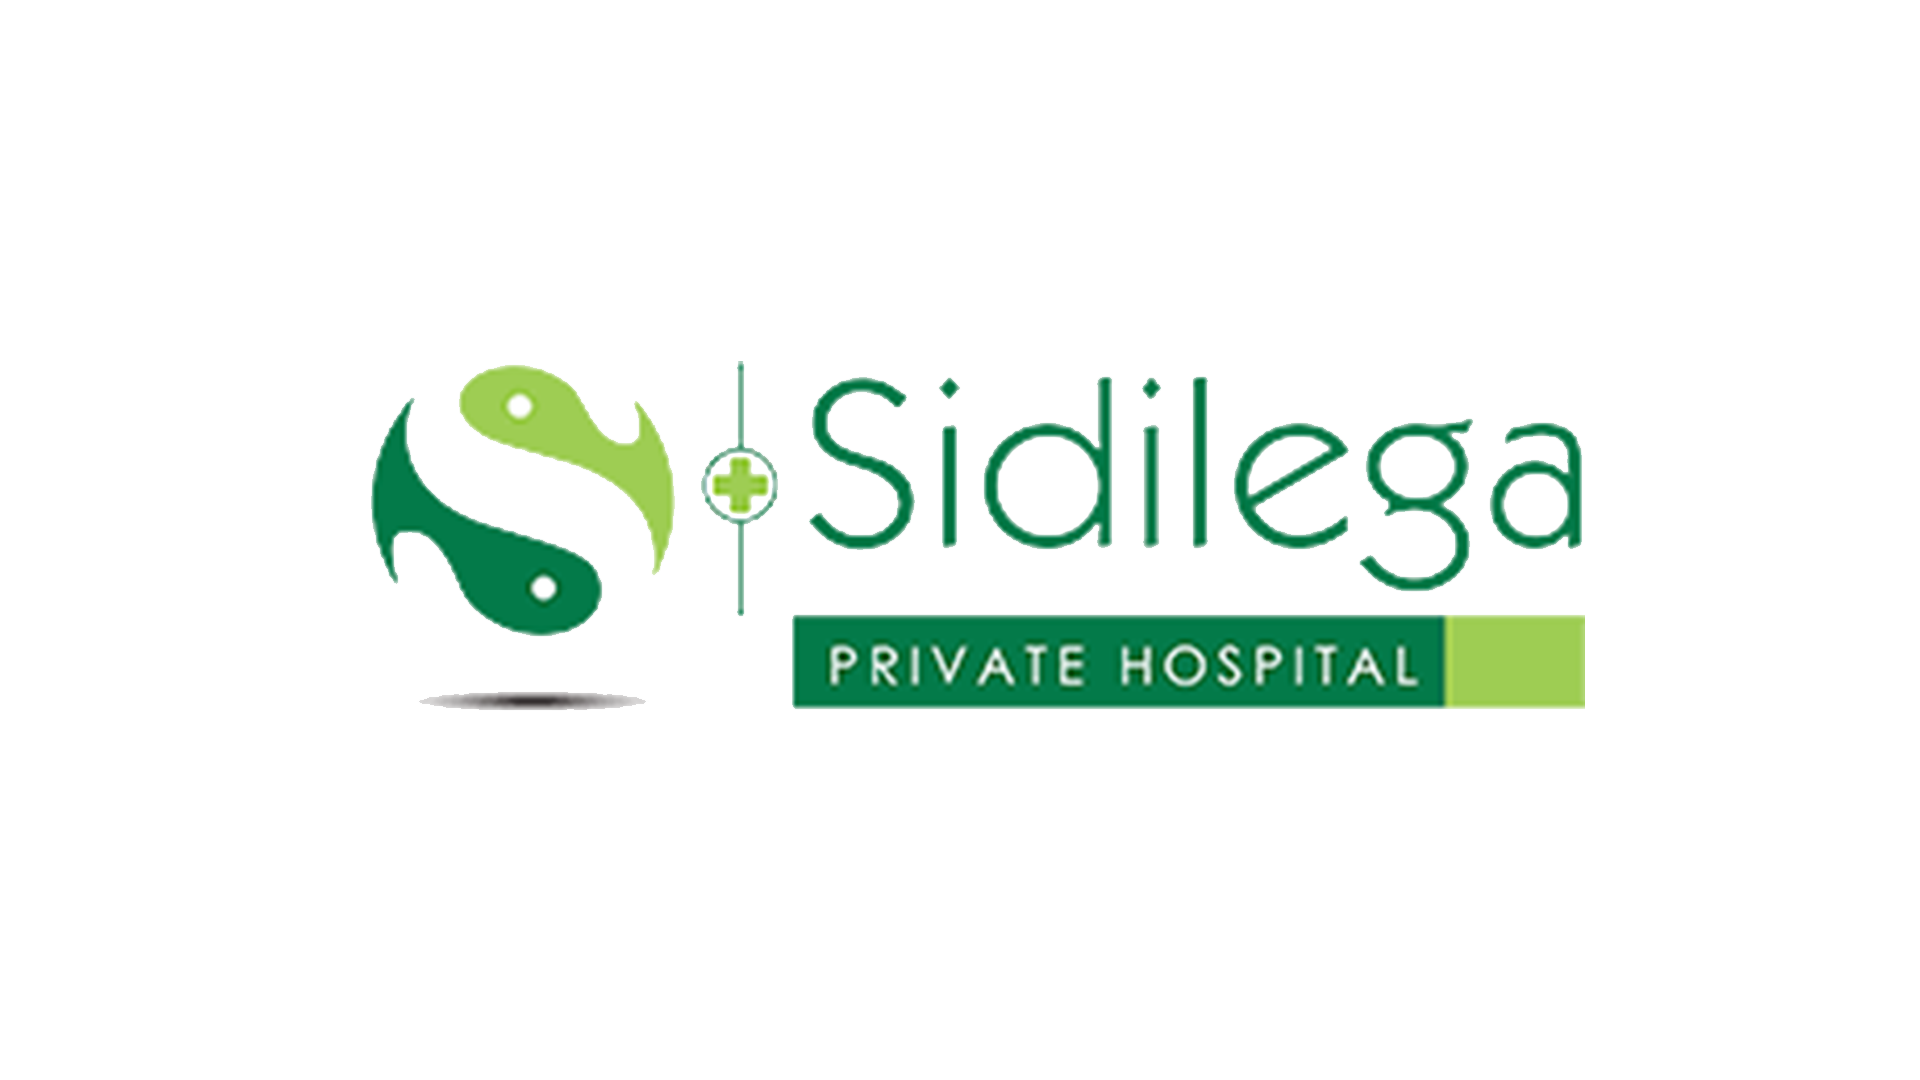 Sidilega-PH-transparent.png